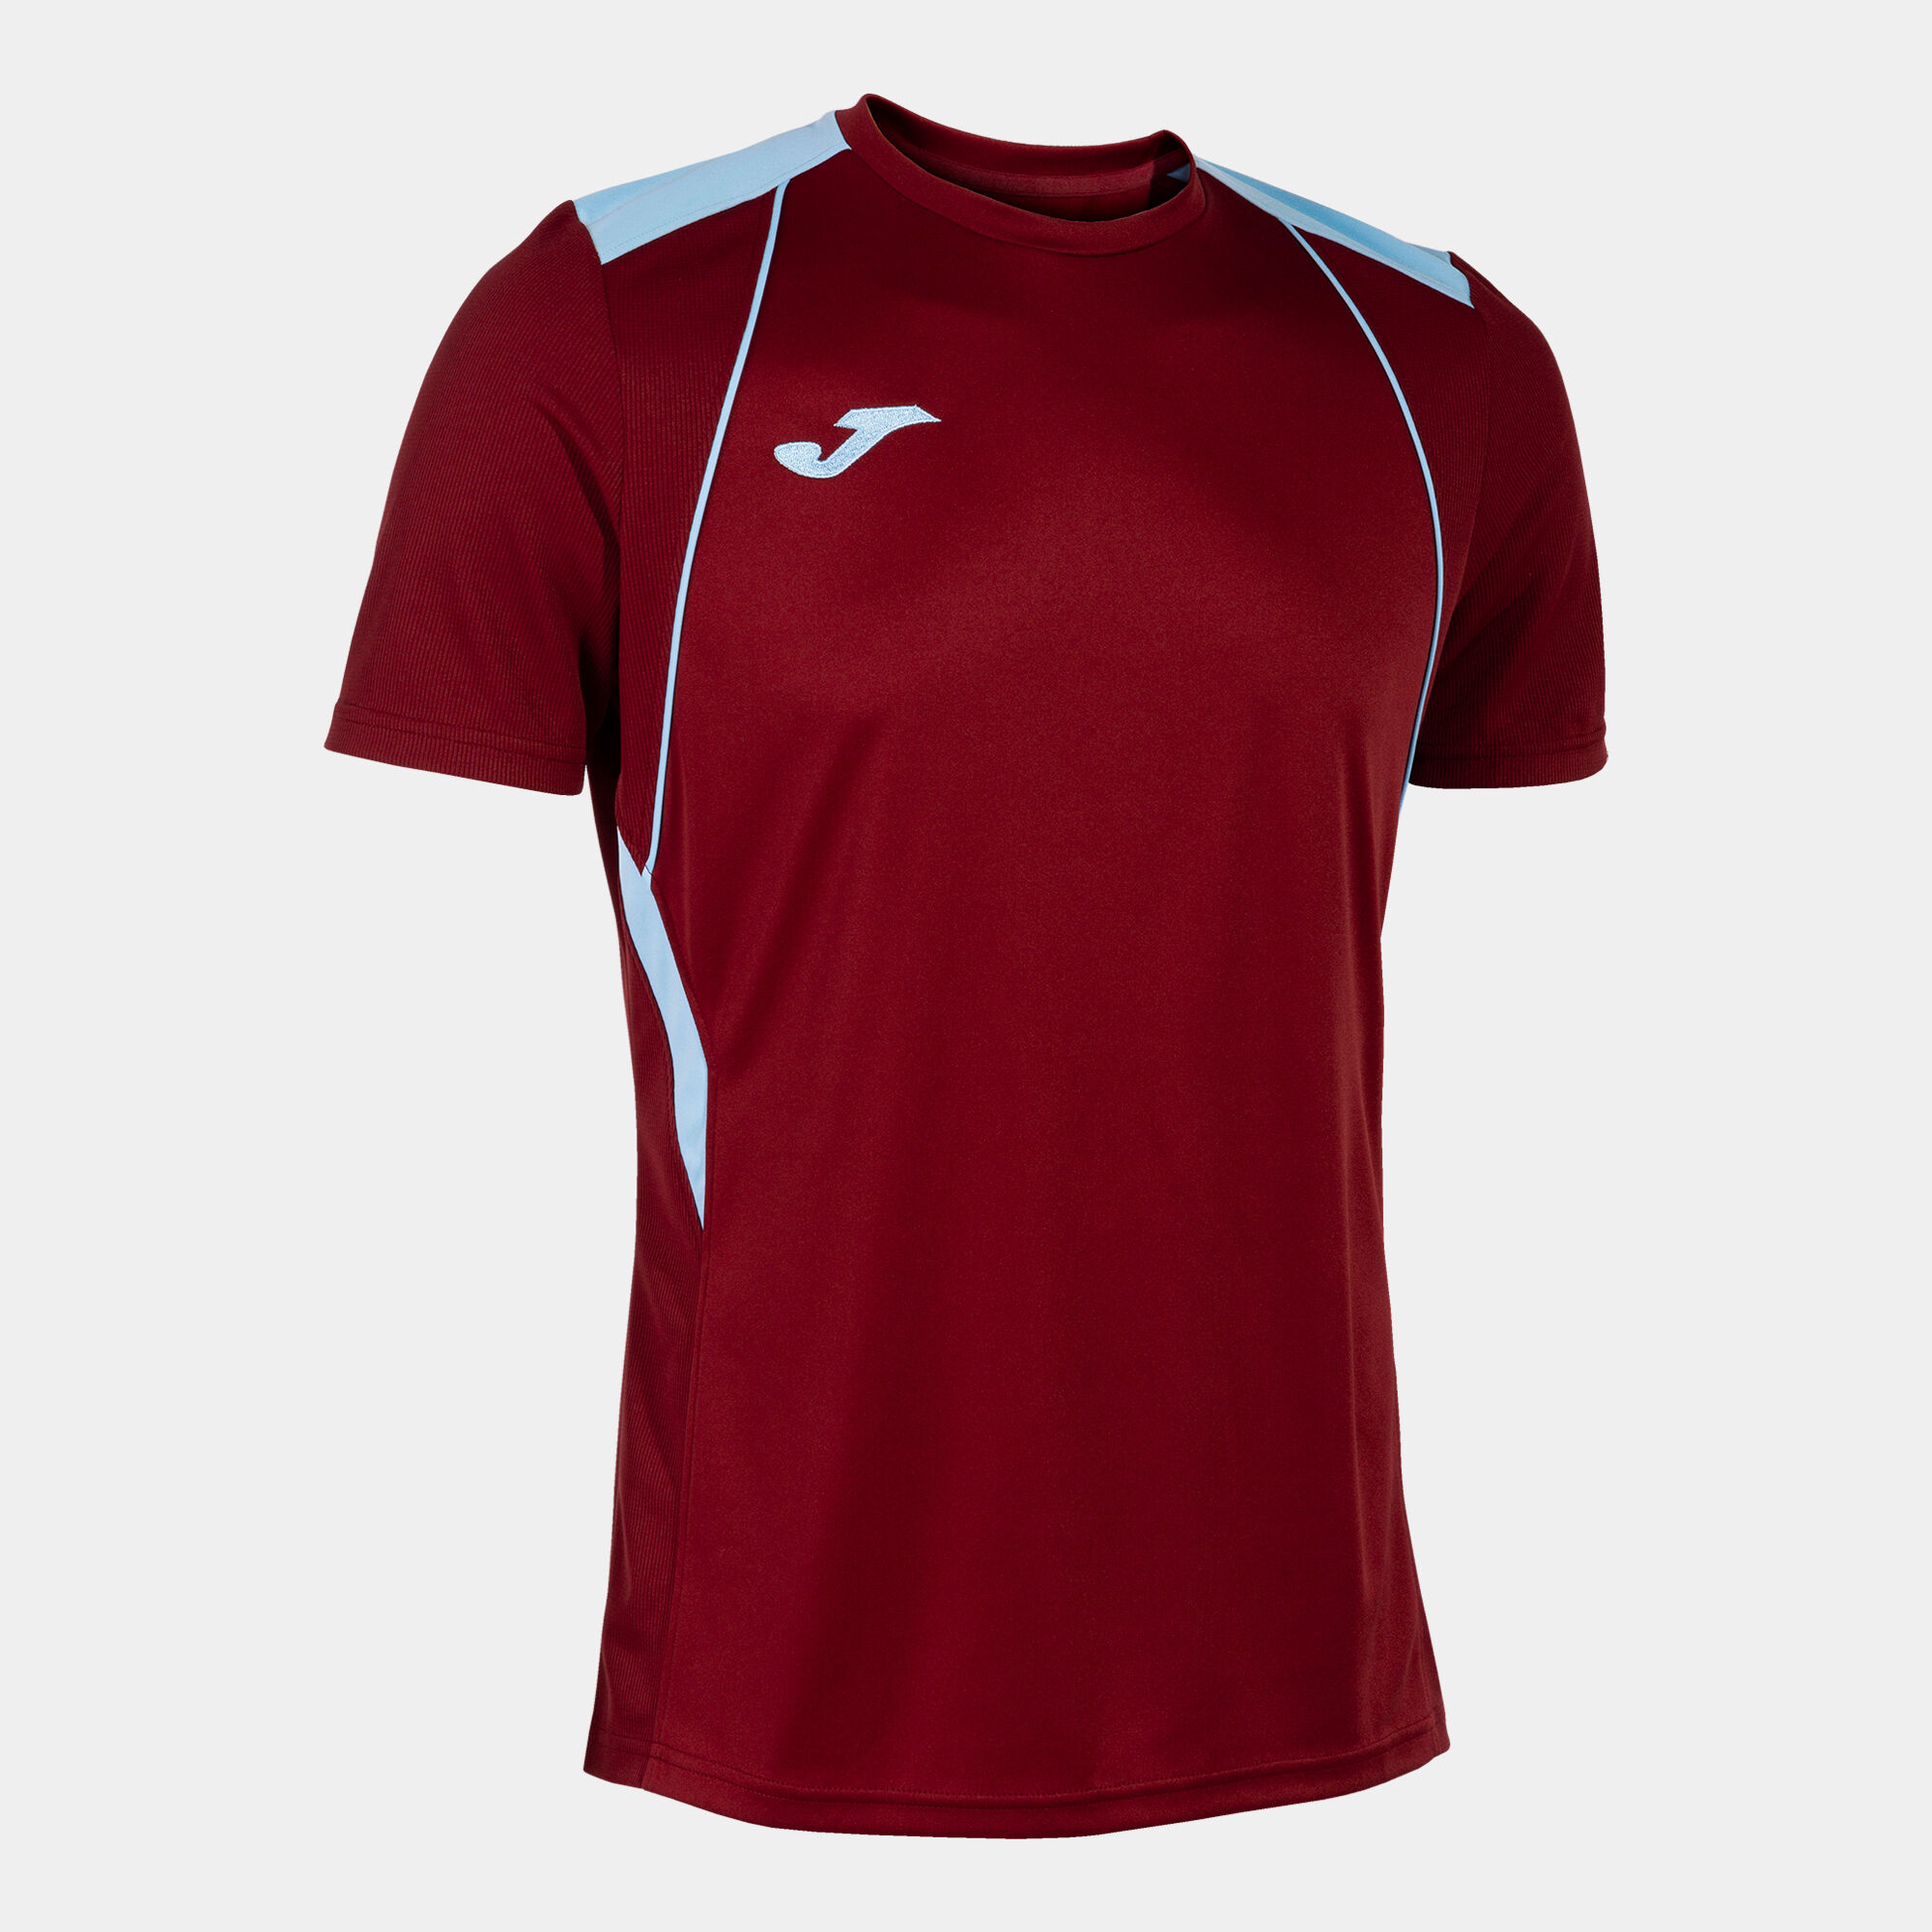 Shirt short sleeve man Championship VII burgundy sky blue